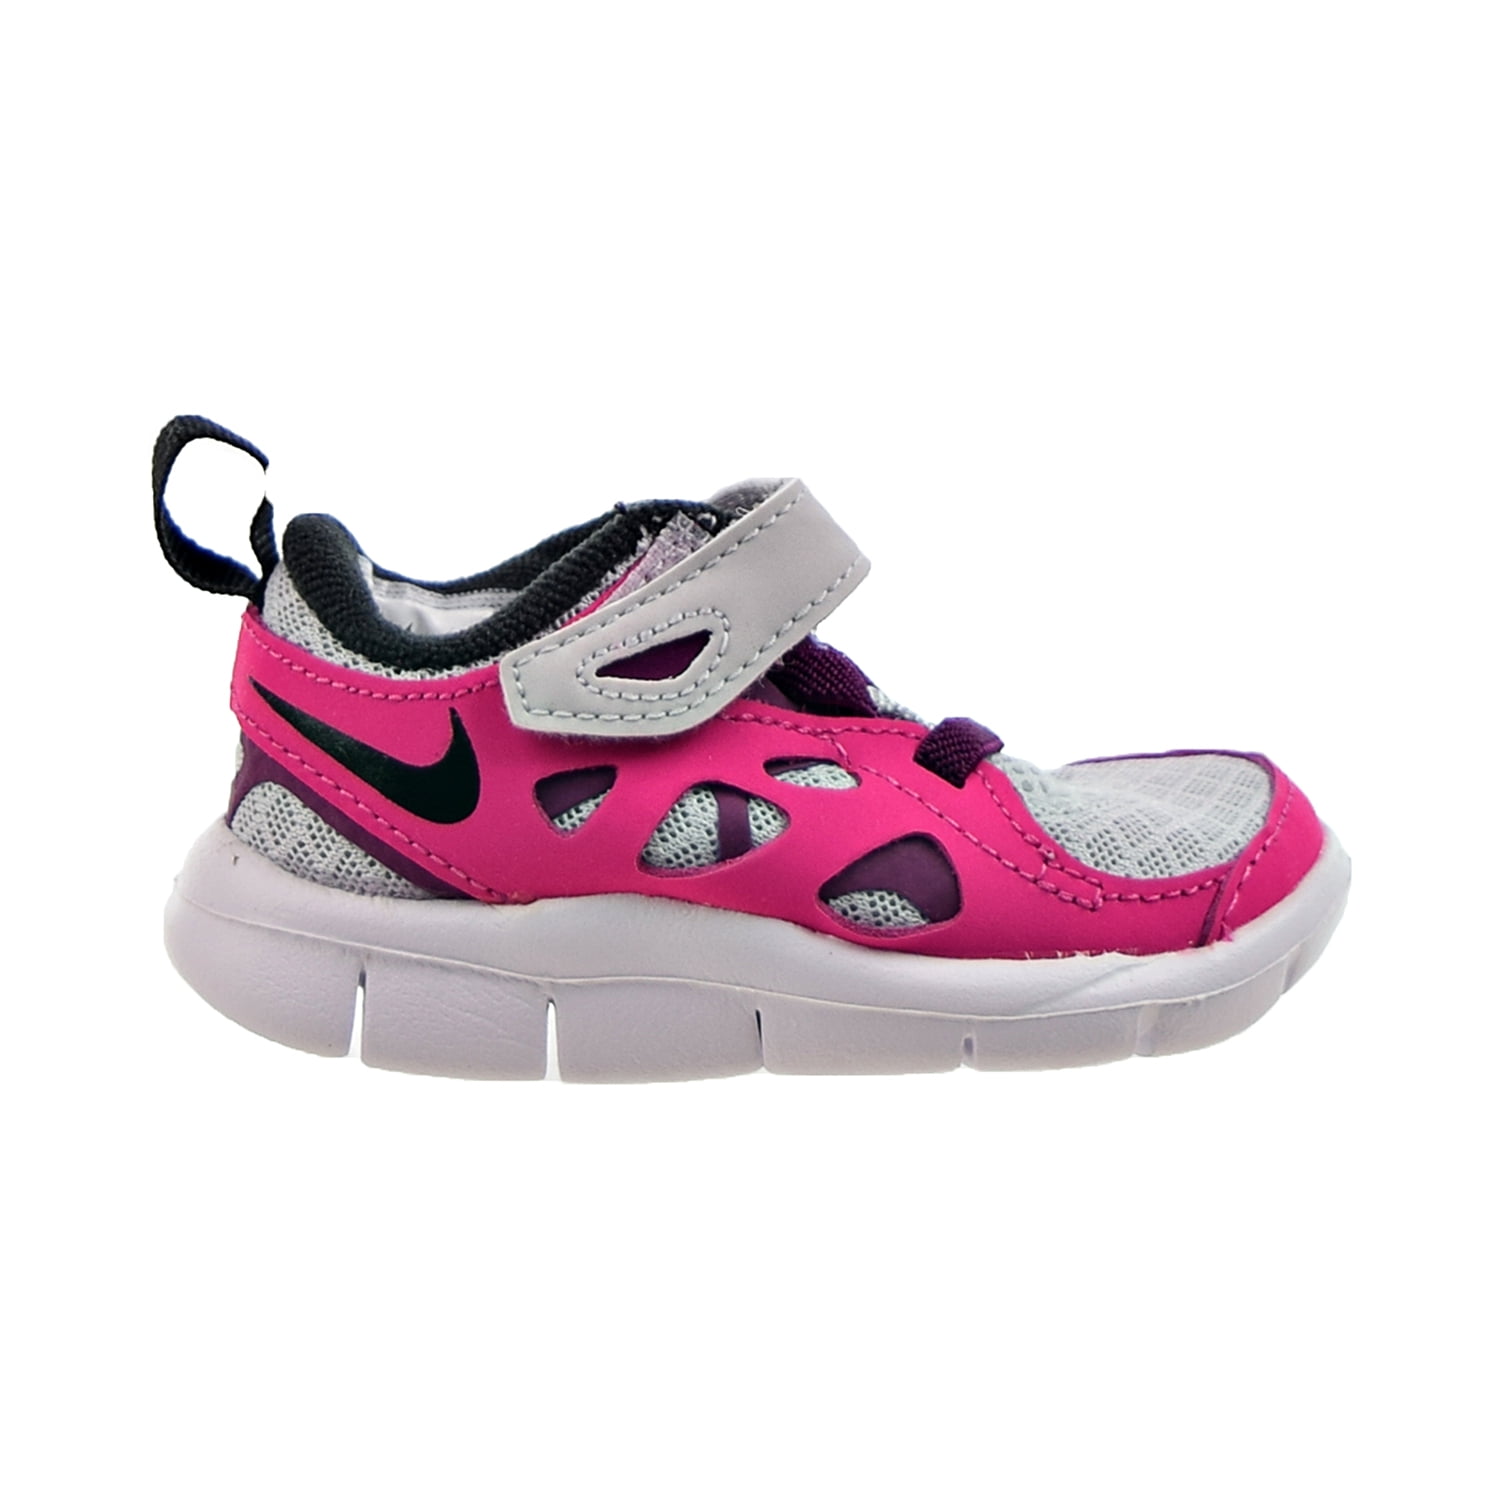 bueno Discreto Museo Nike Free Run 2 (TD) Baby/Toddler's Shoes Pure Platinum-Pink  Prime-Sangria-Black da2692-001 - Walmart.com